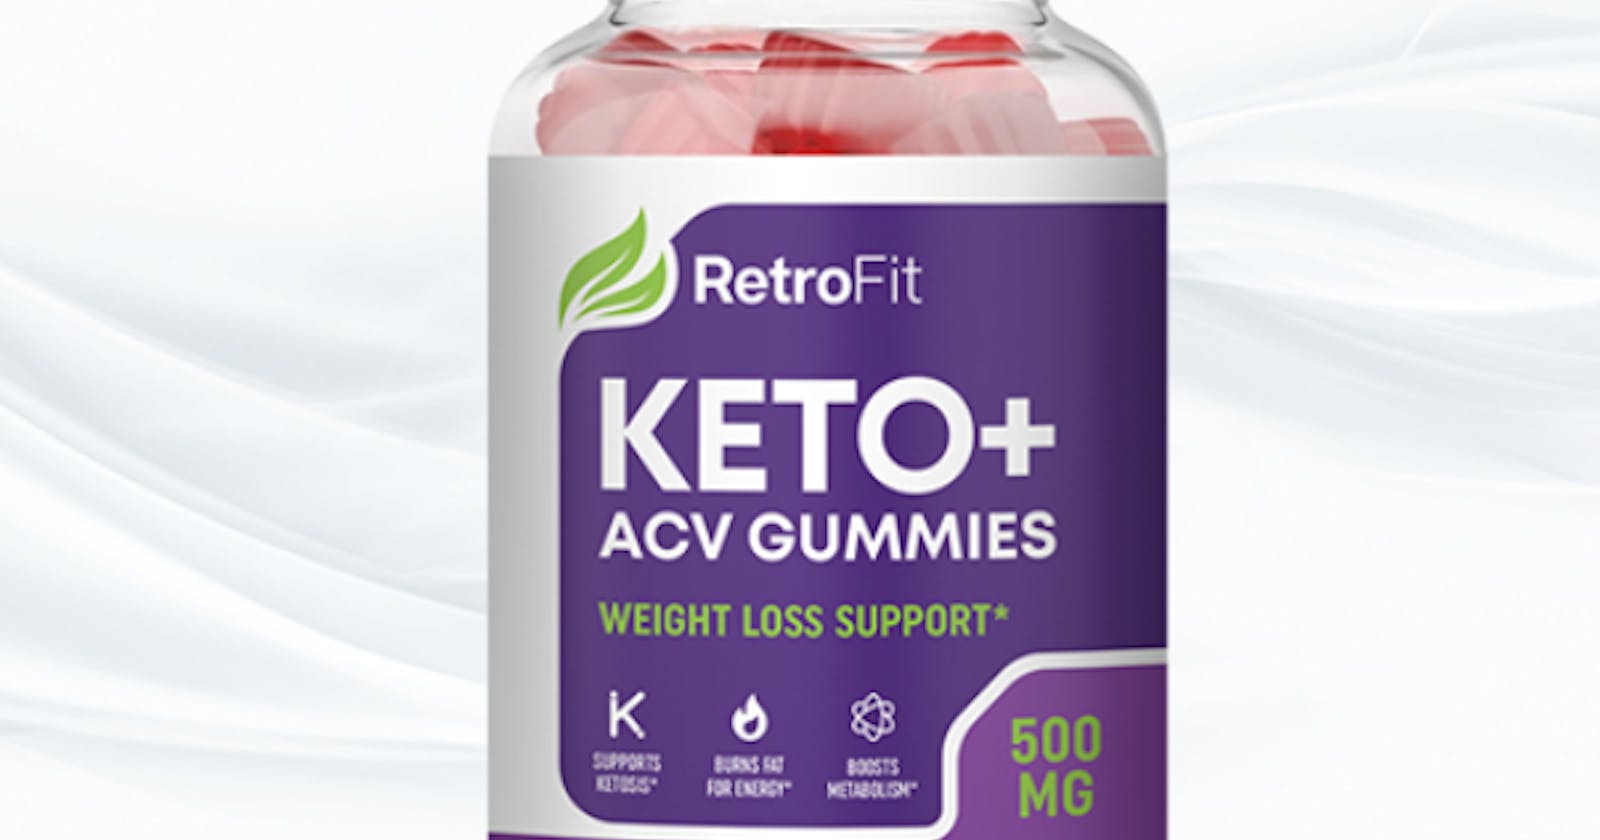 Retrofit Keto ACV Gummies Ingredients?